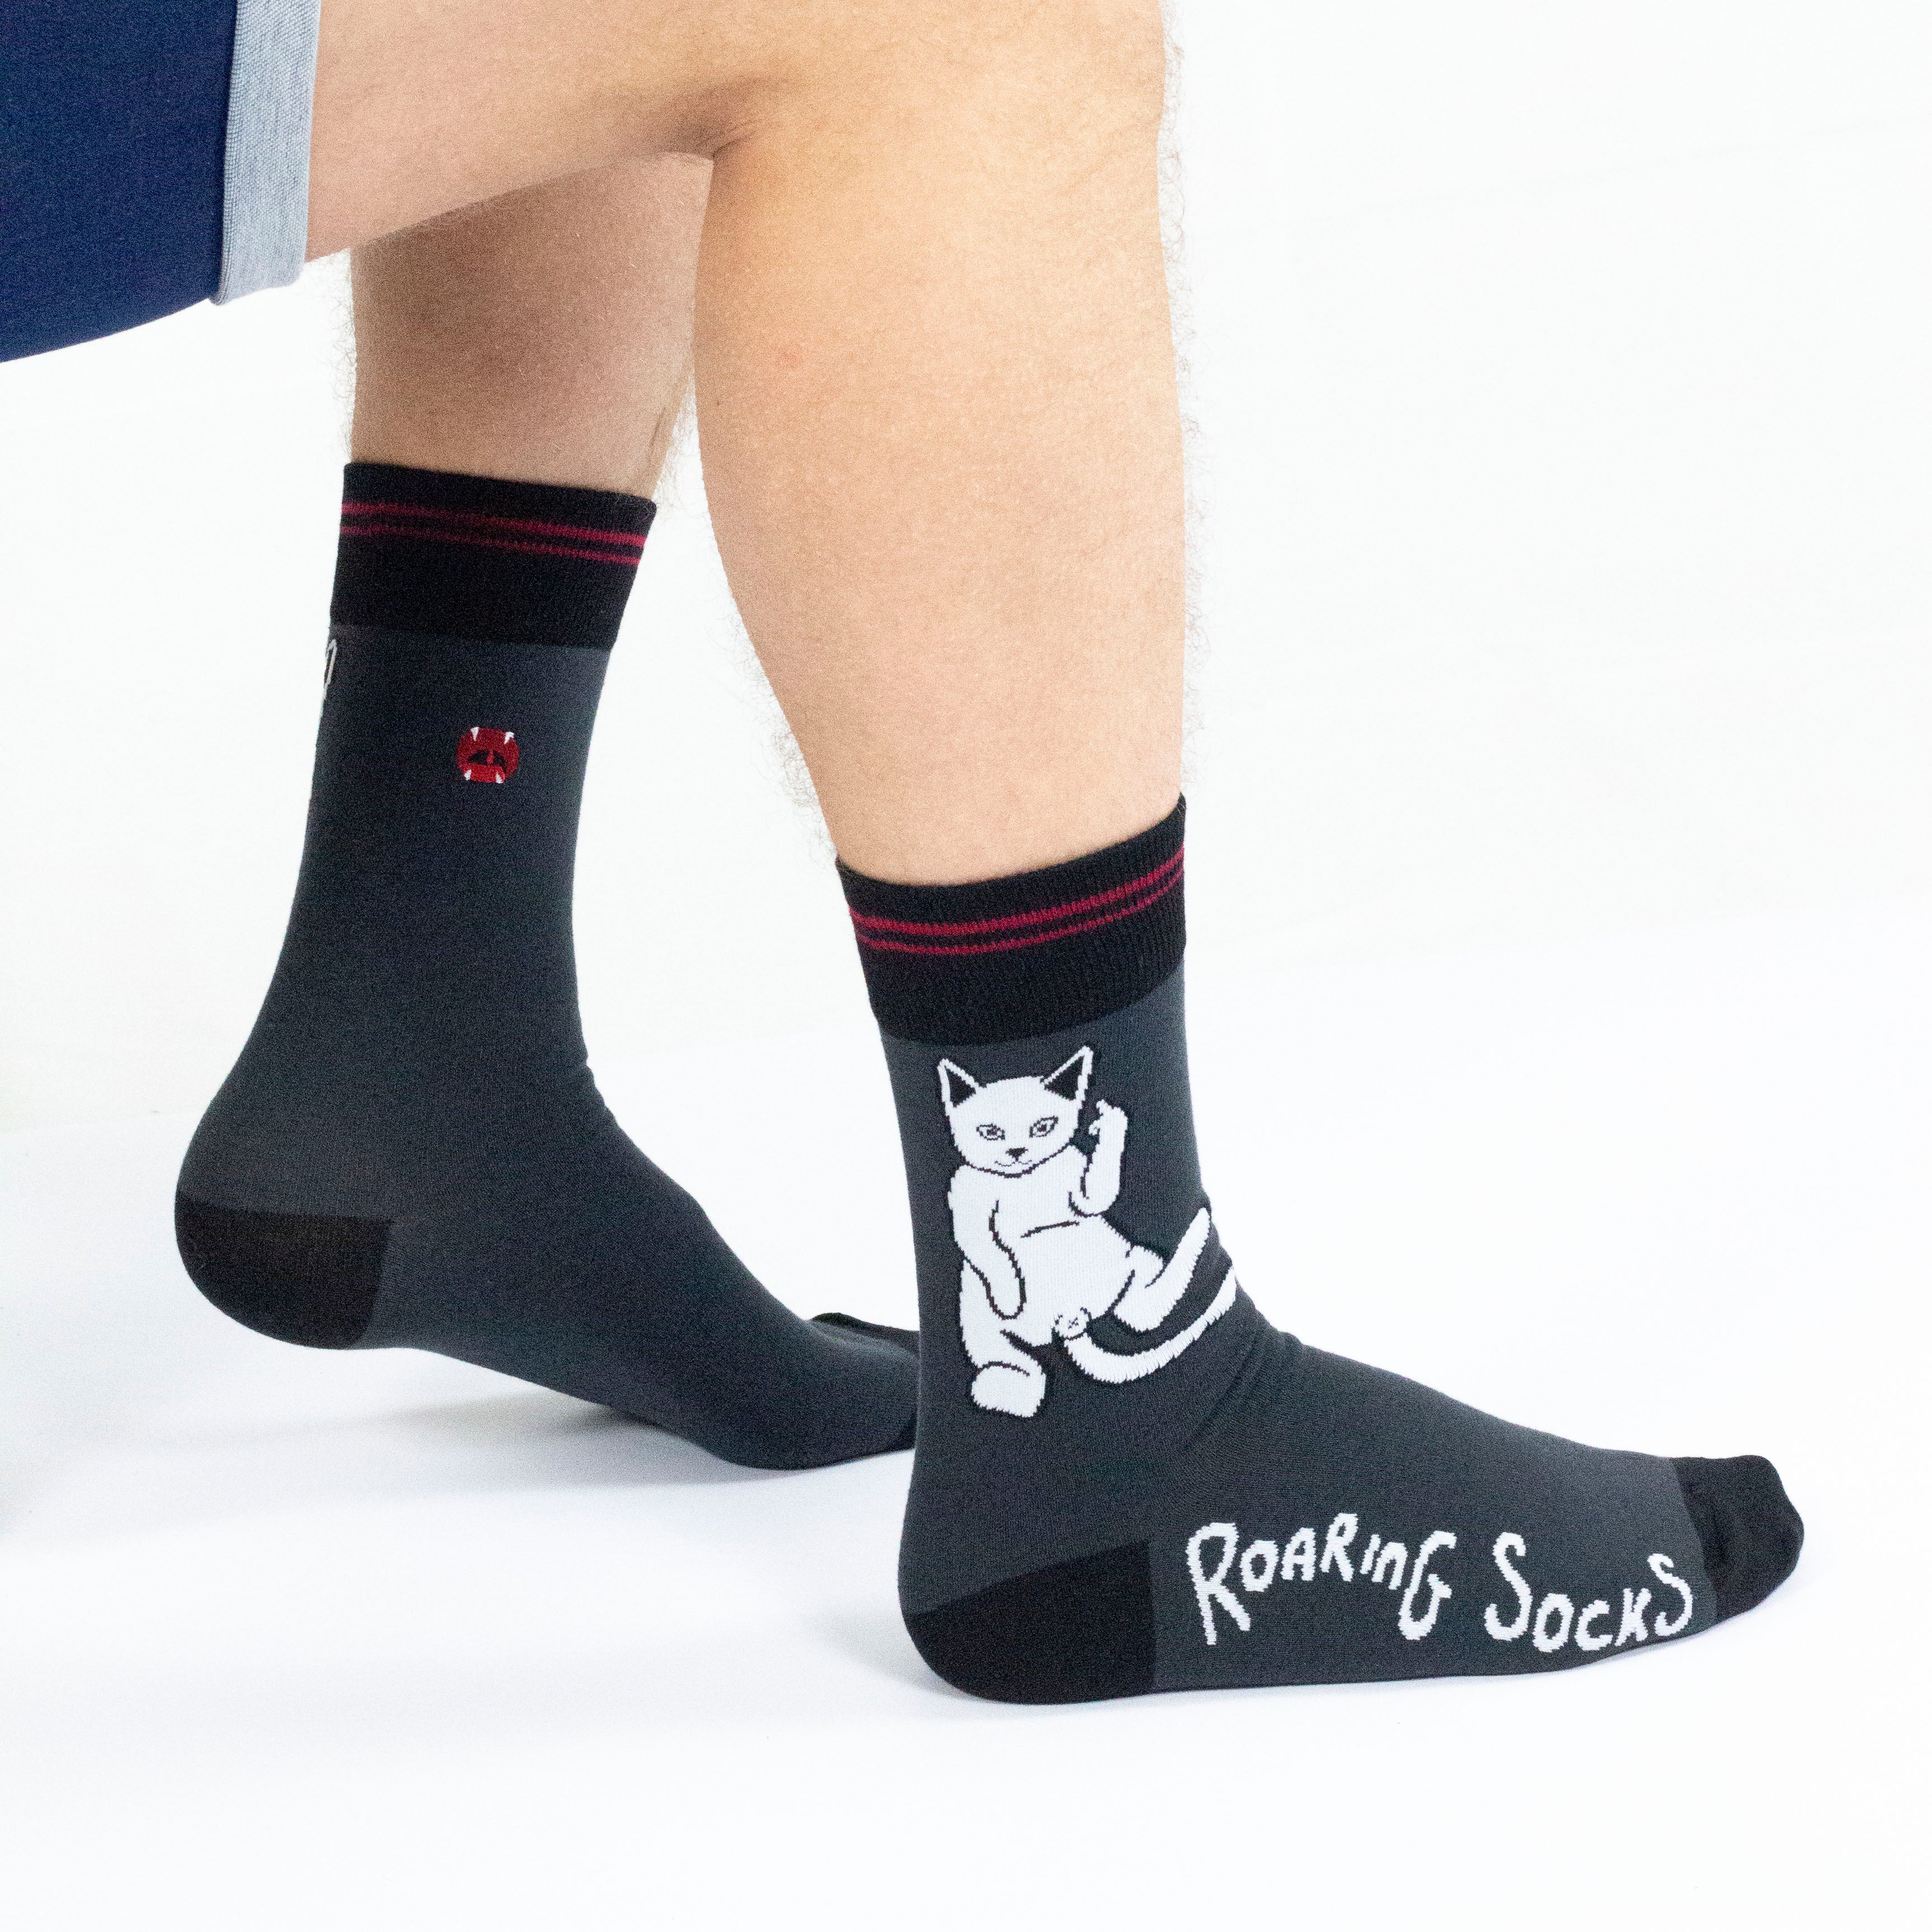 Roaring Socks - Sokken - Fucking Pussy - Zwart Black - Kat Poes - Fuck you - Katoen - Leuk - Grappig - Vrolijk - Fashion - Cadeau